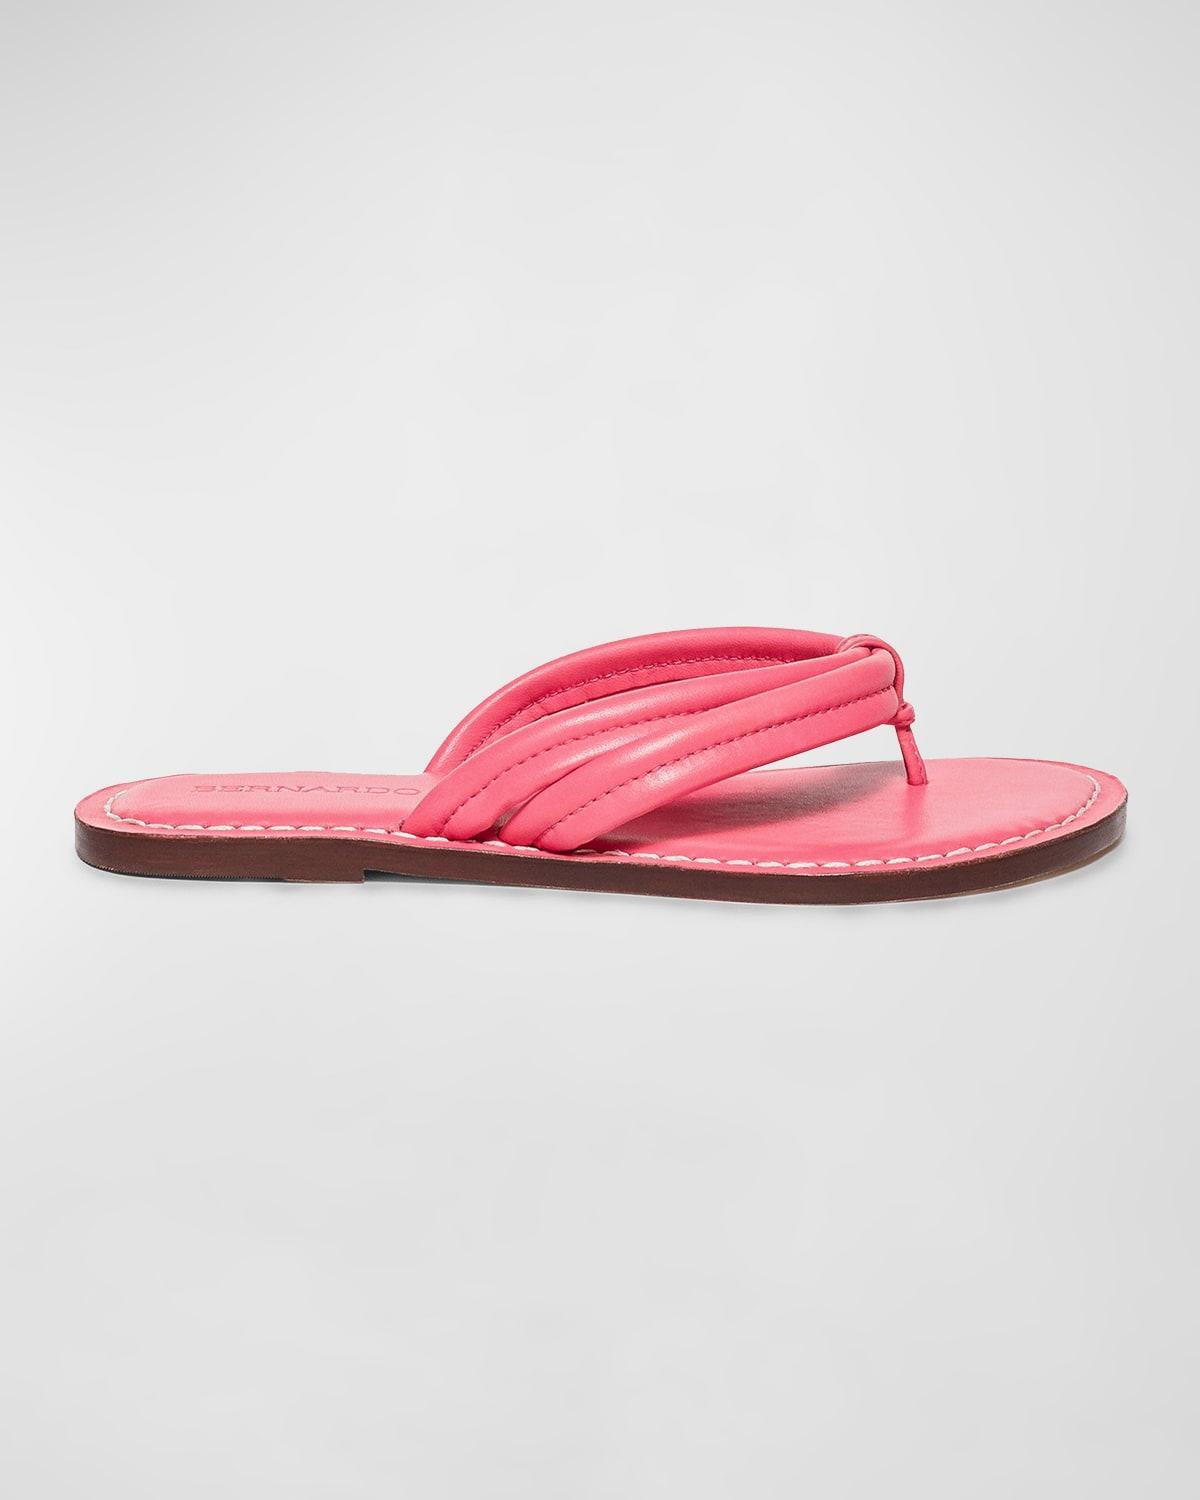 Bernardo Miami Sandal (Blush) Women's Sandals Product Image